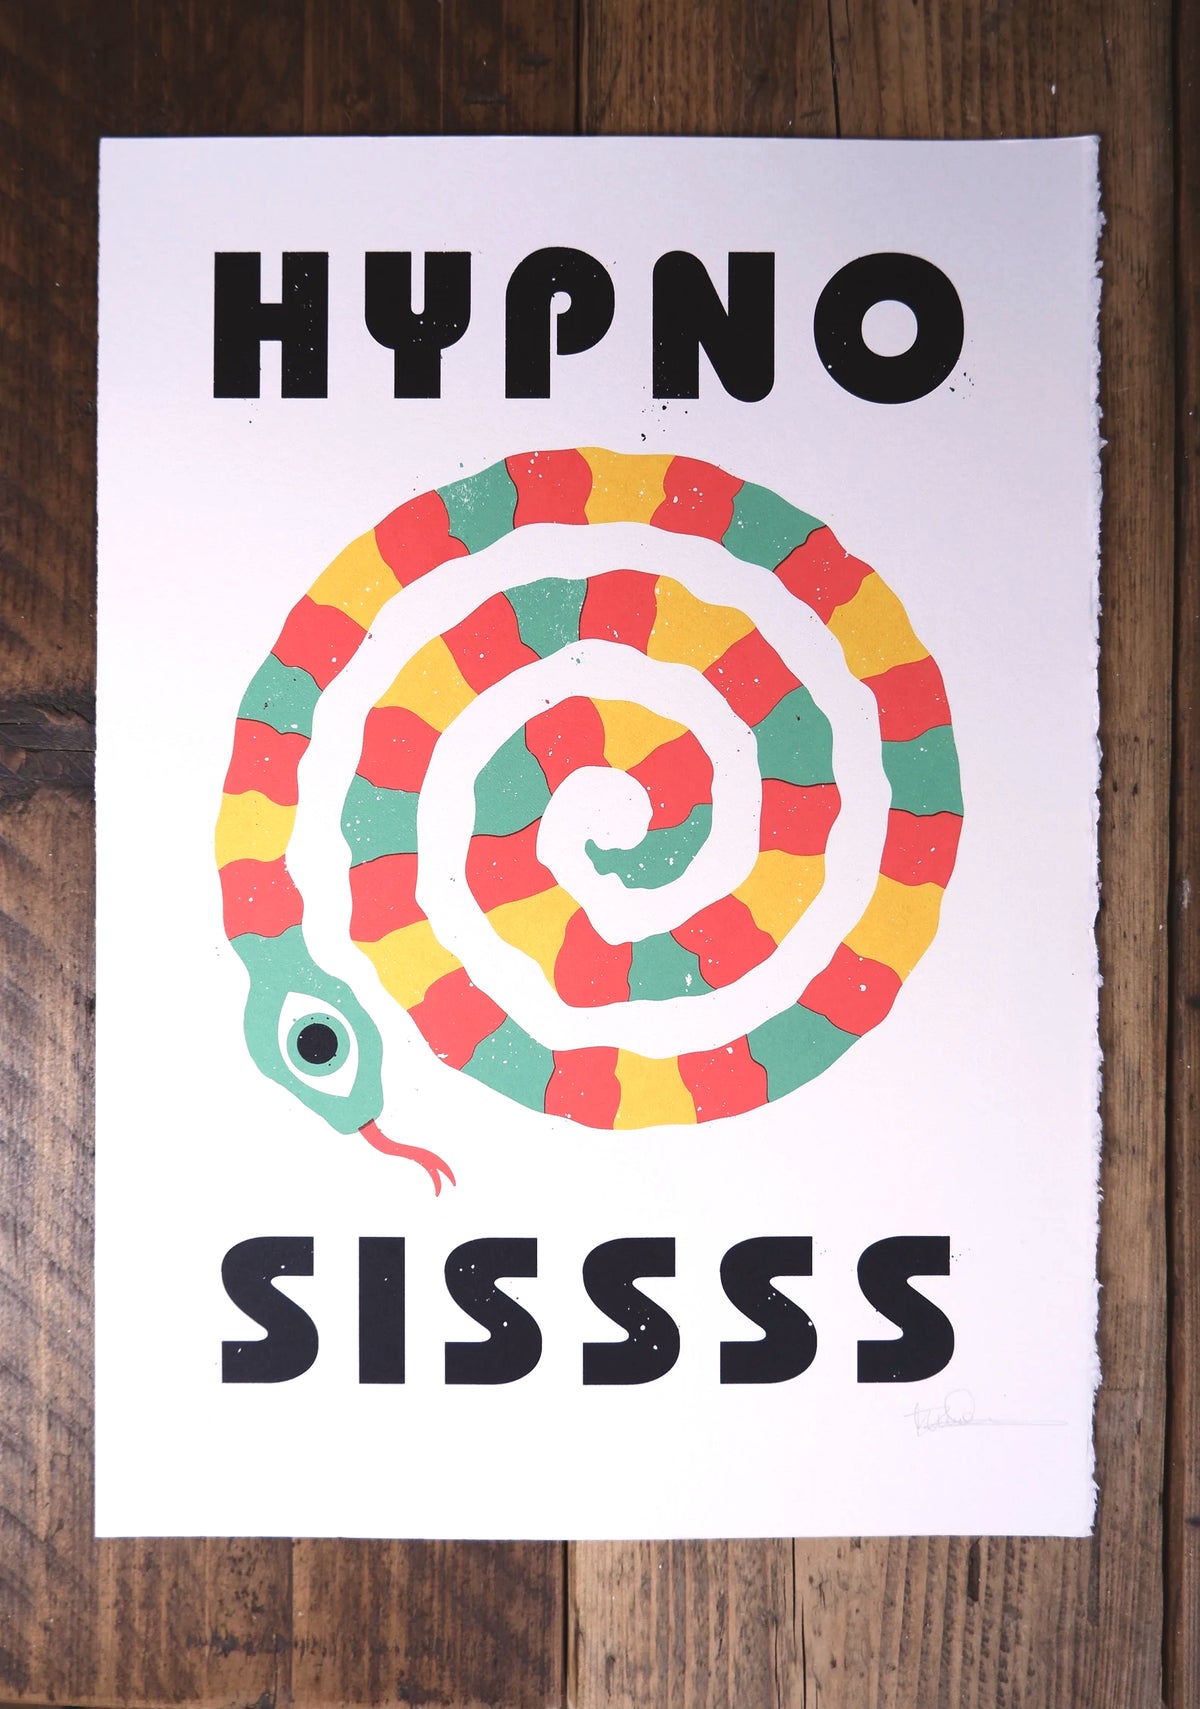 Hypnosisss by James Treadaway